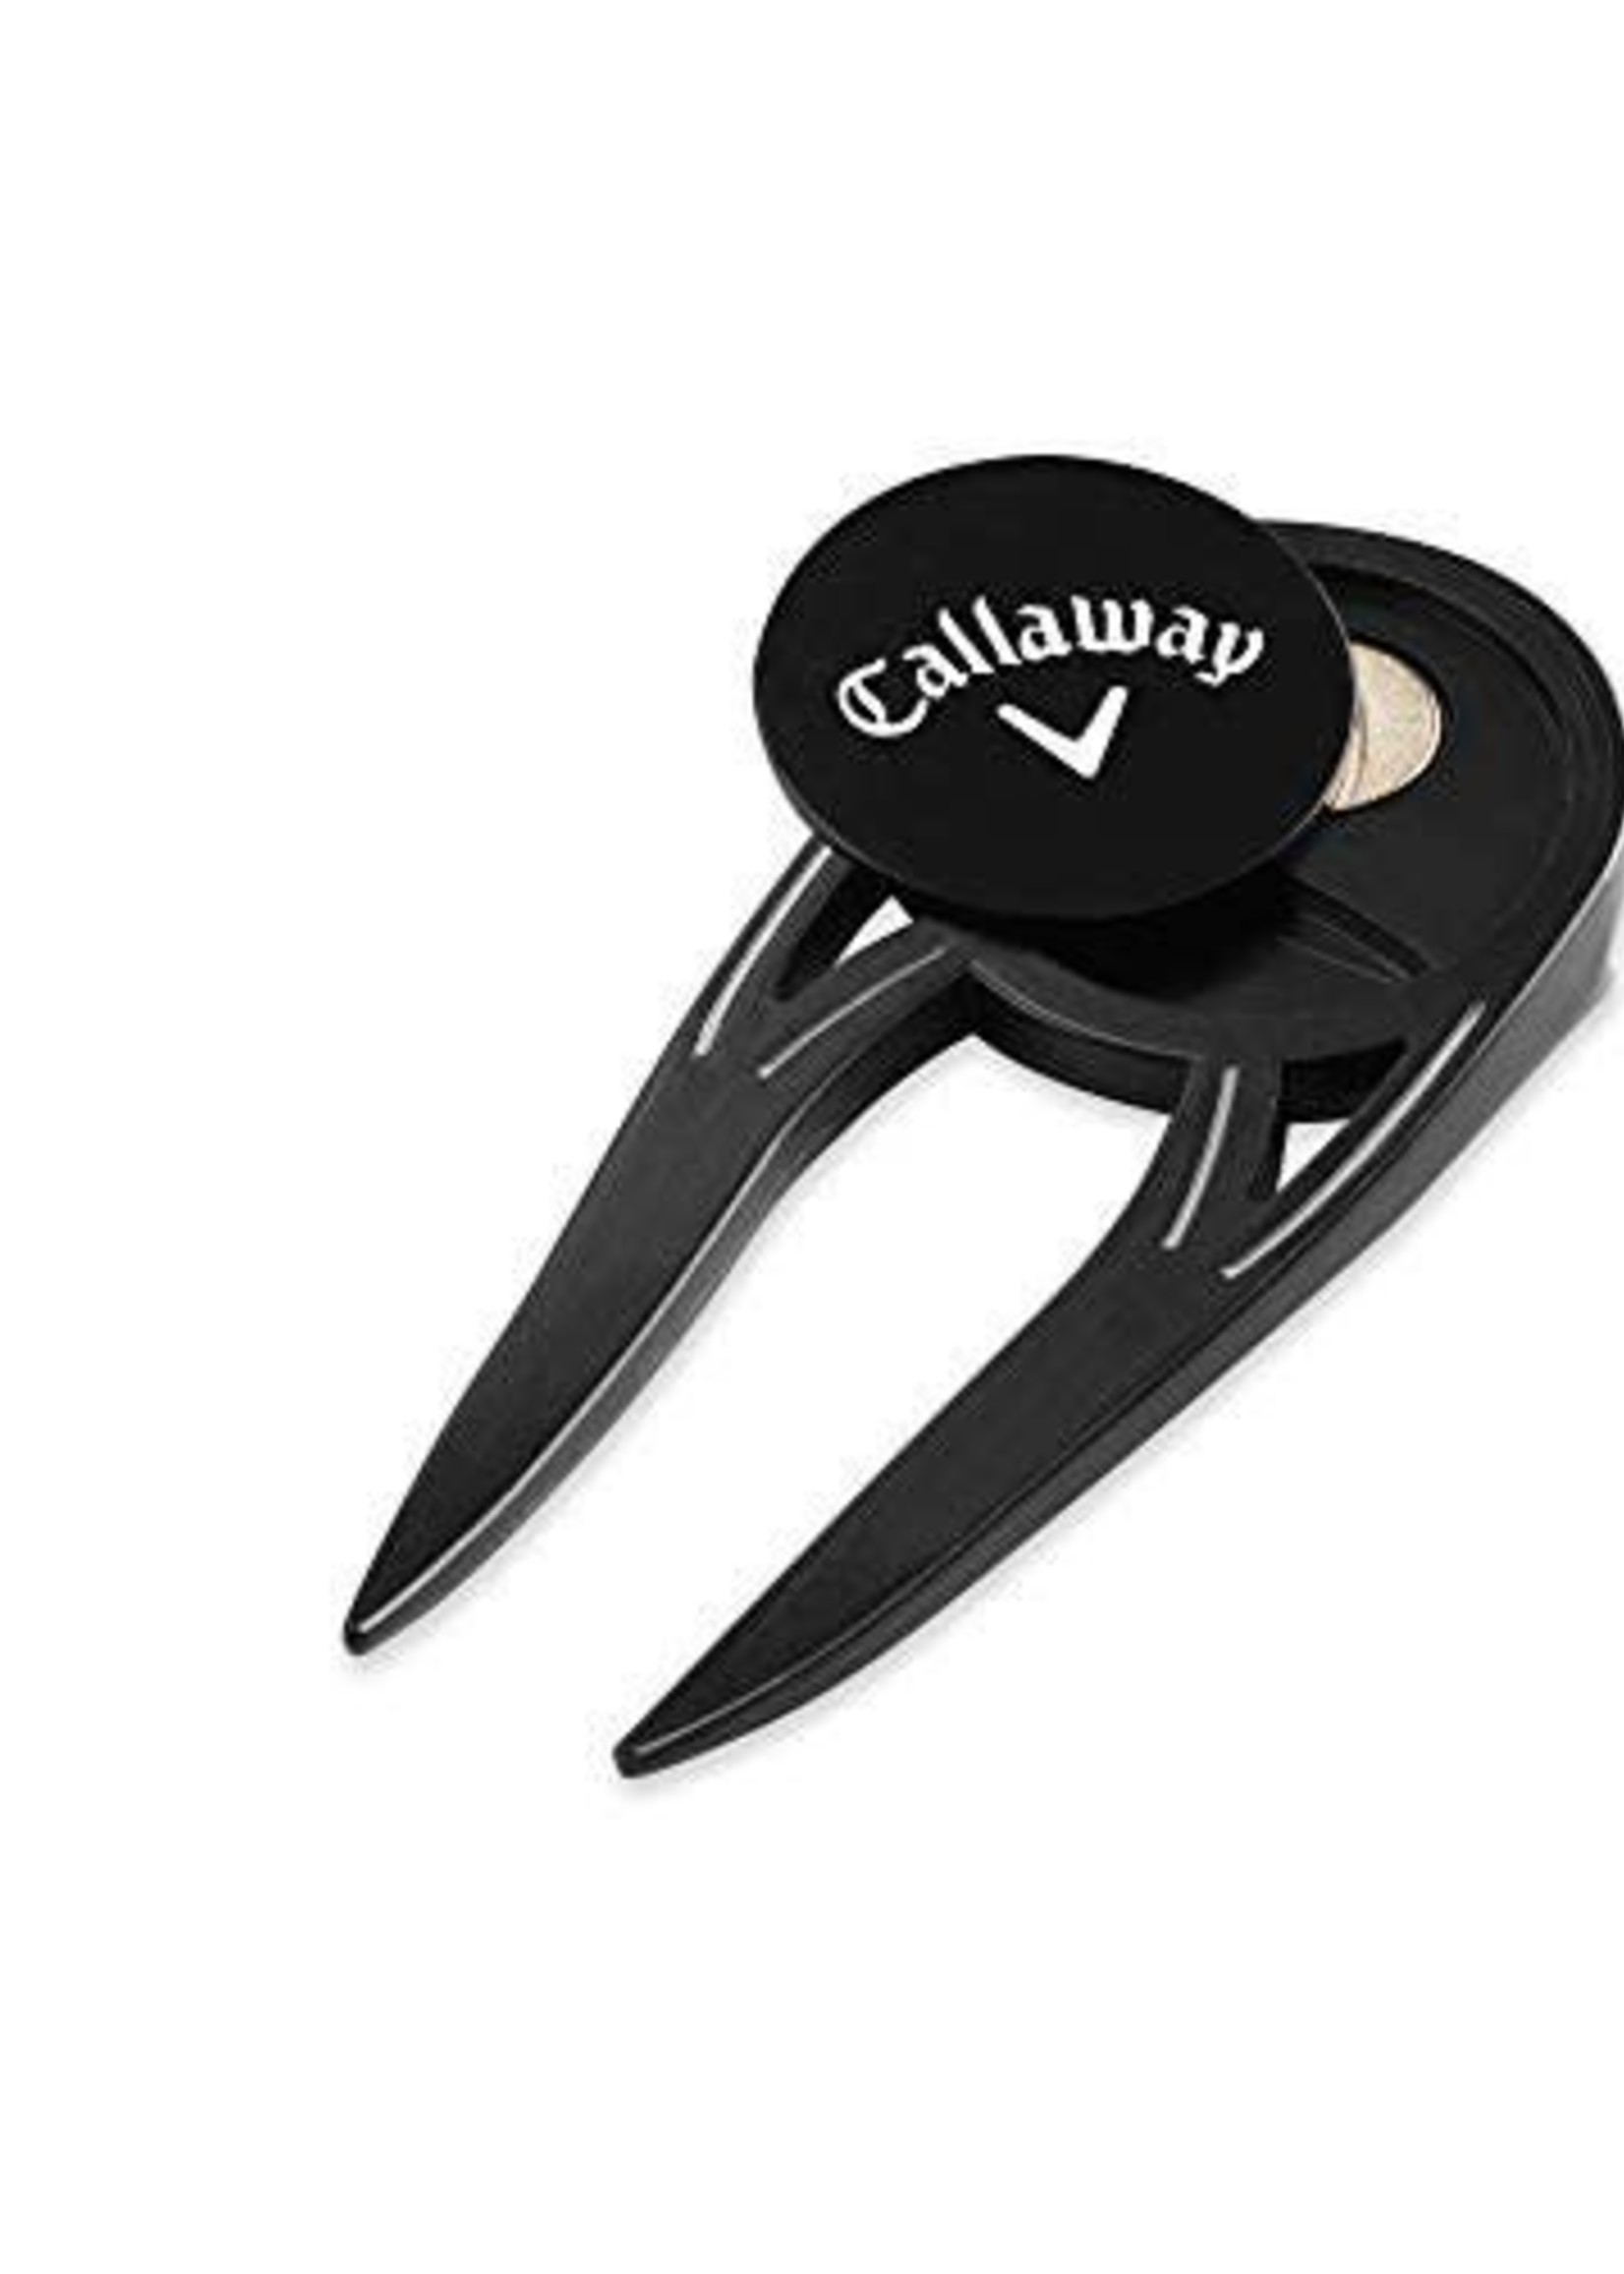 Callaway Callaway Double Prong Divot Tool Black